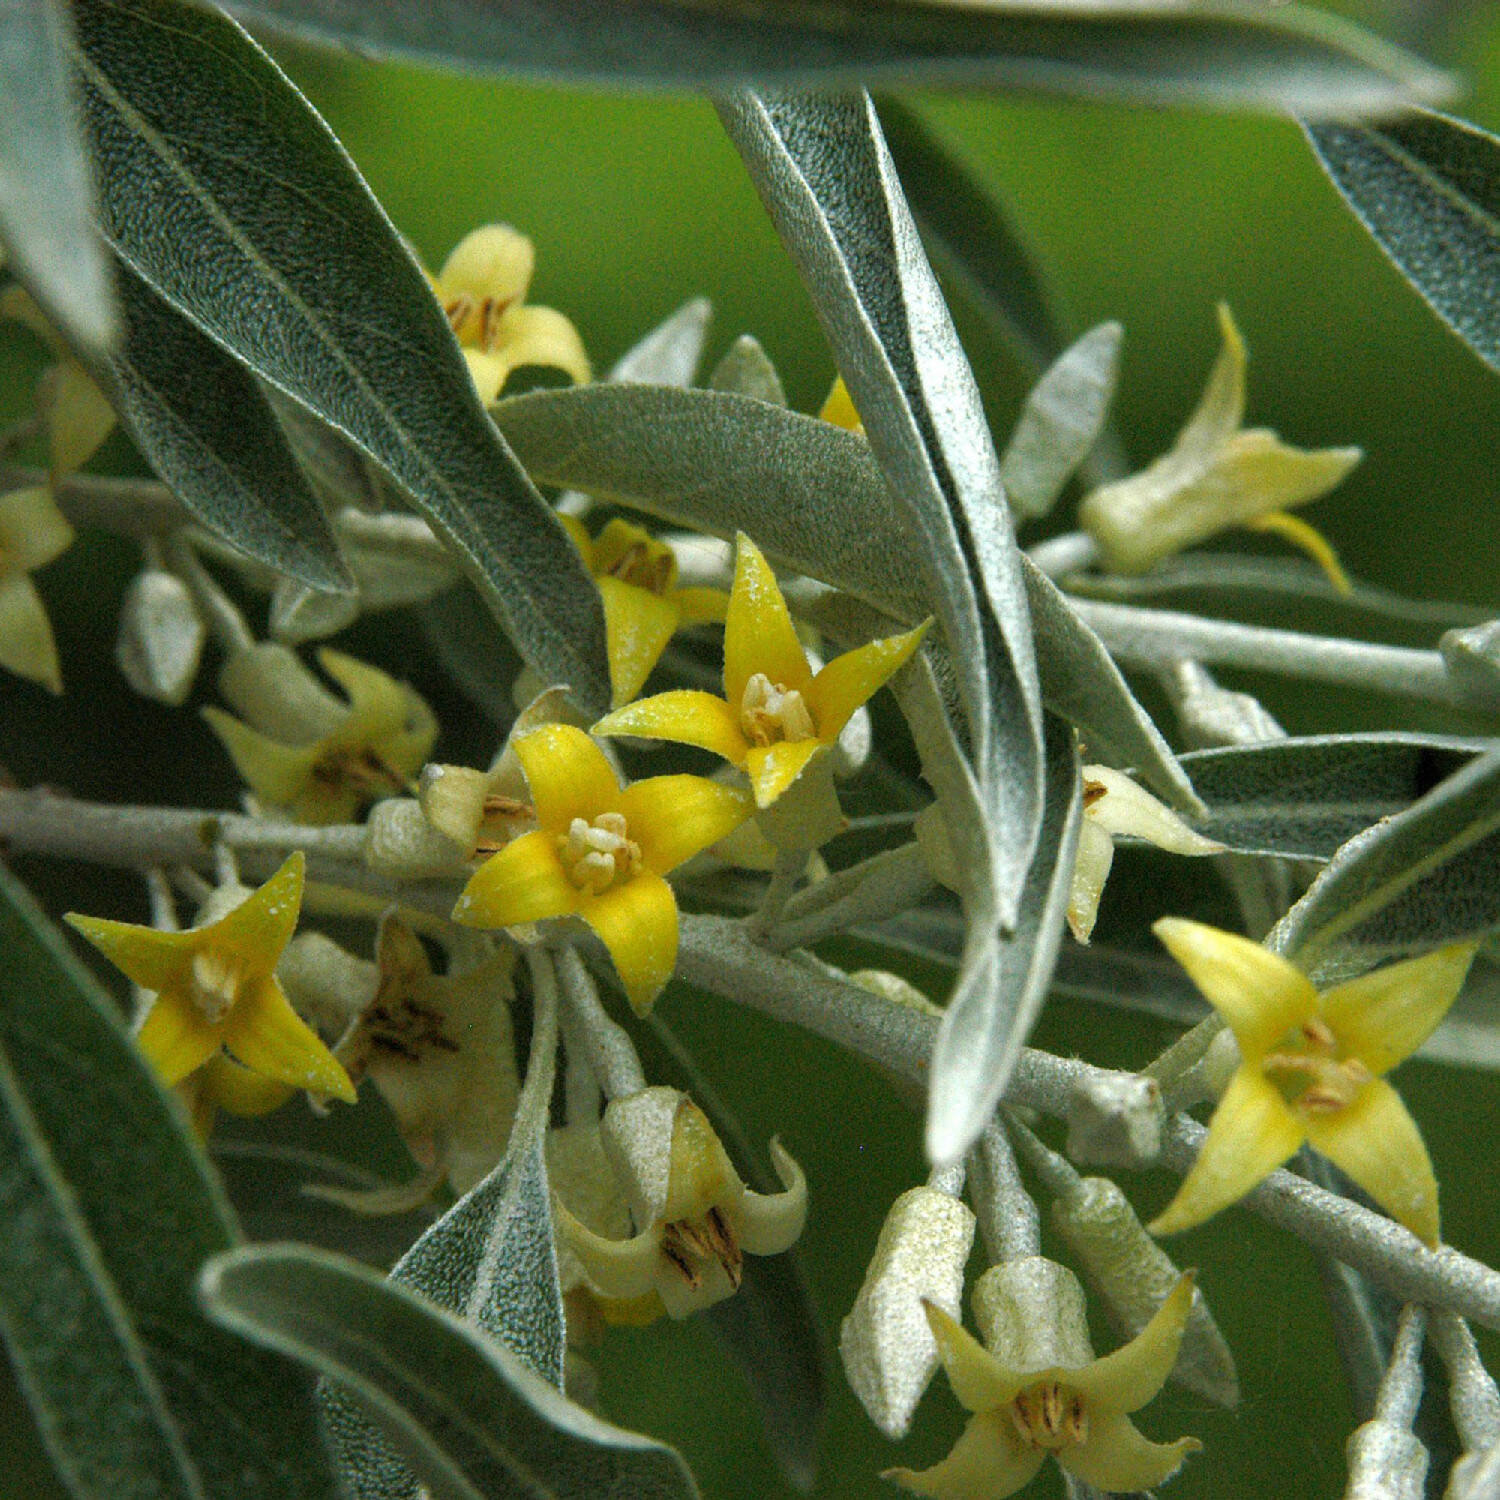  Schmalblättrige Ölweide - Elaeagnus angustifolia